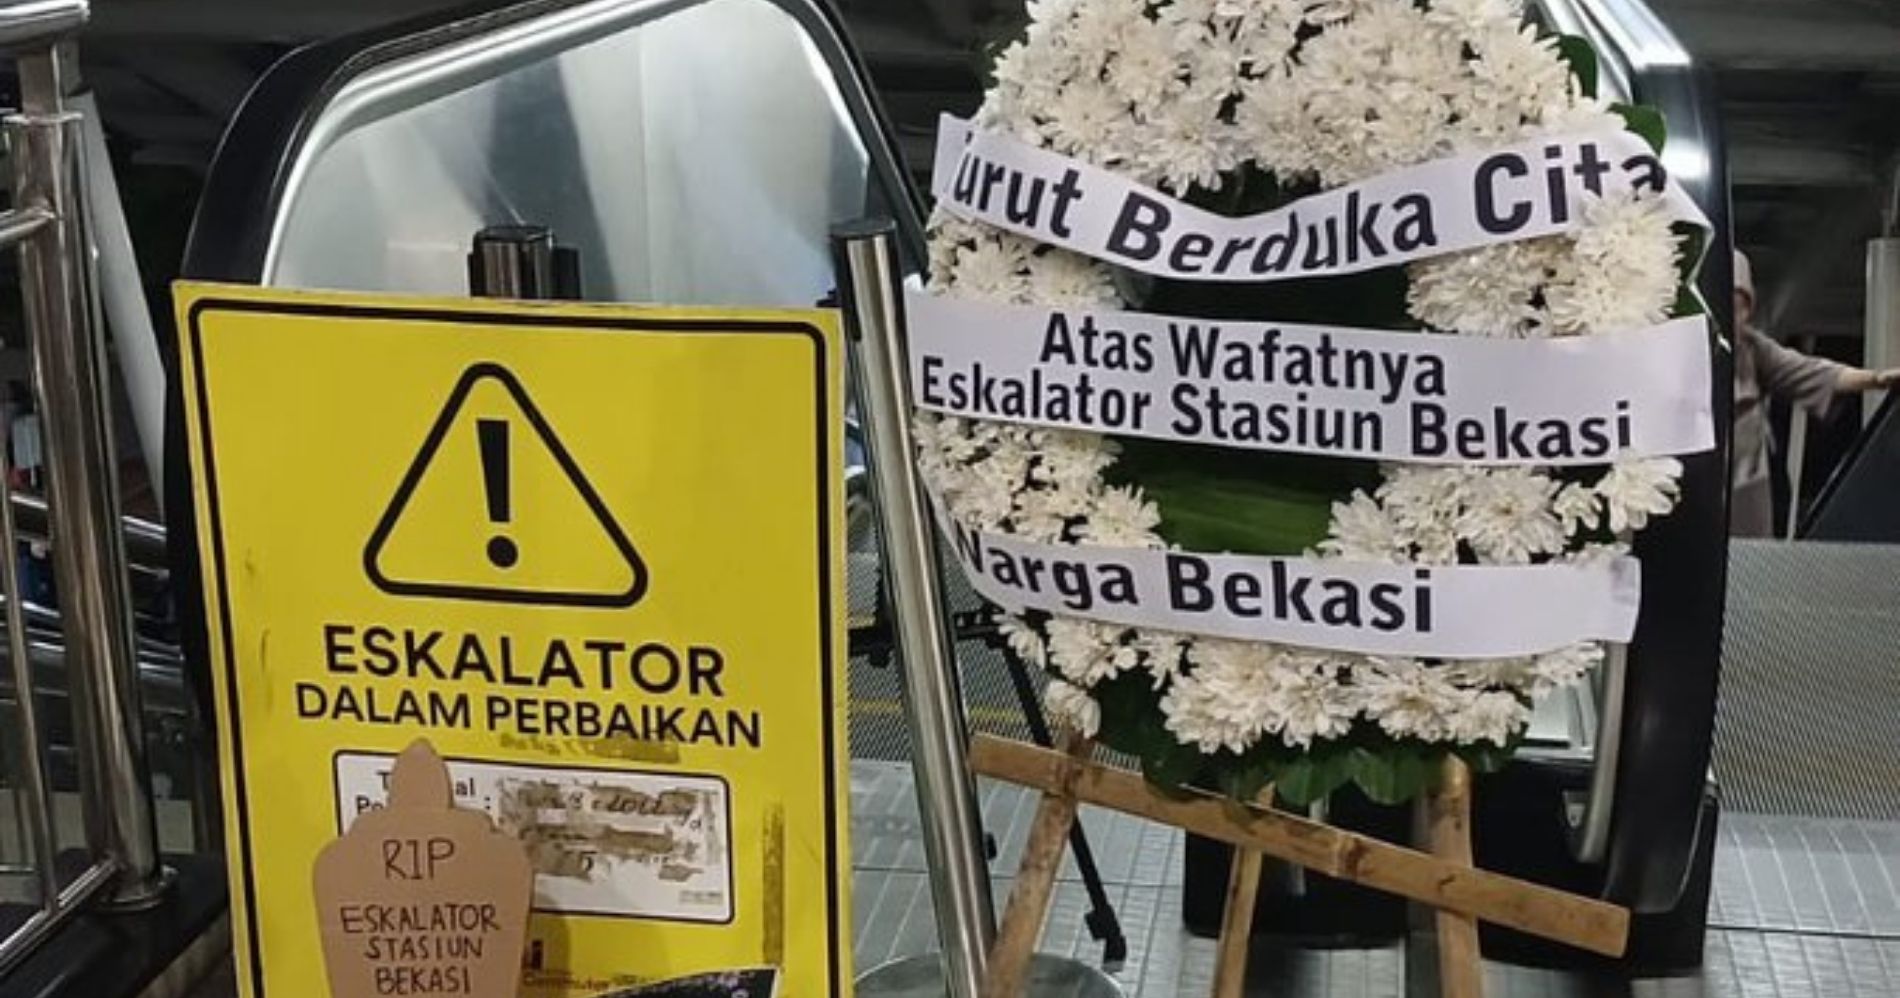 Eskalator Stasiun Bekasi yang Viral Karena Tak Beroperasi - Image: X @PenerbangRoket